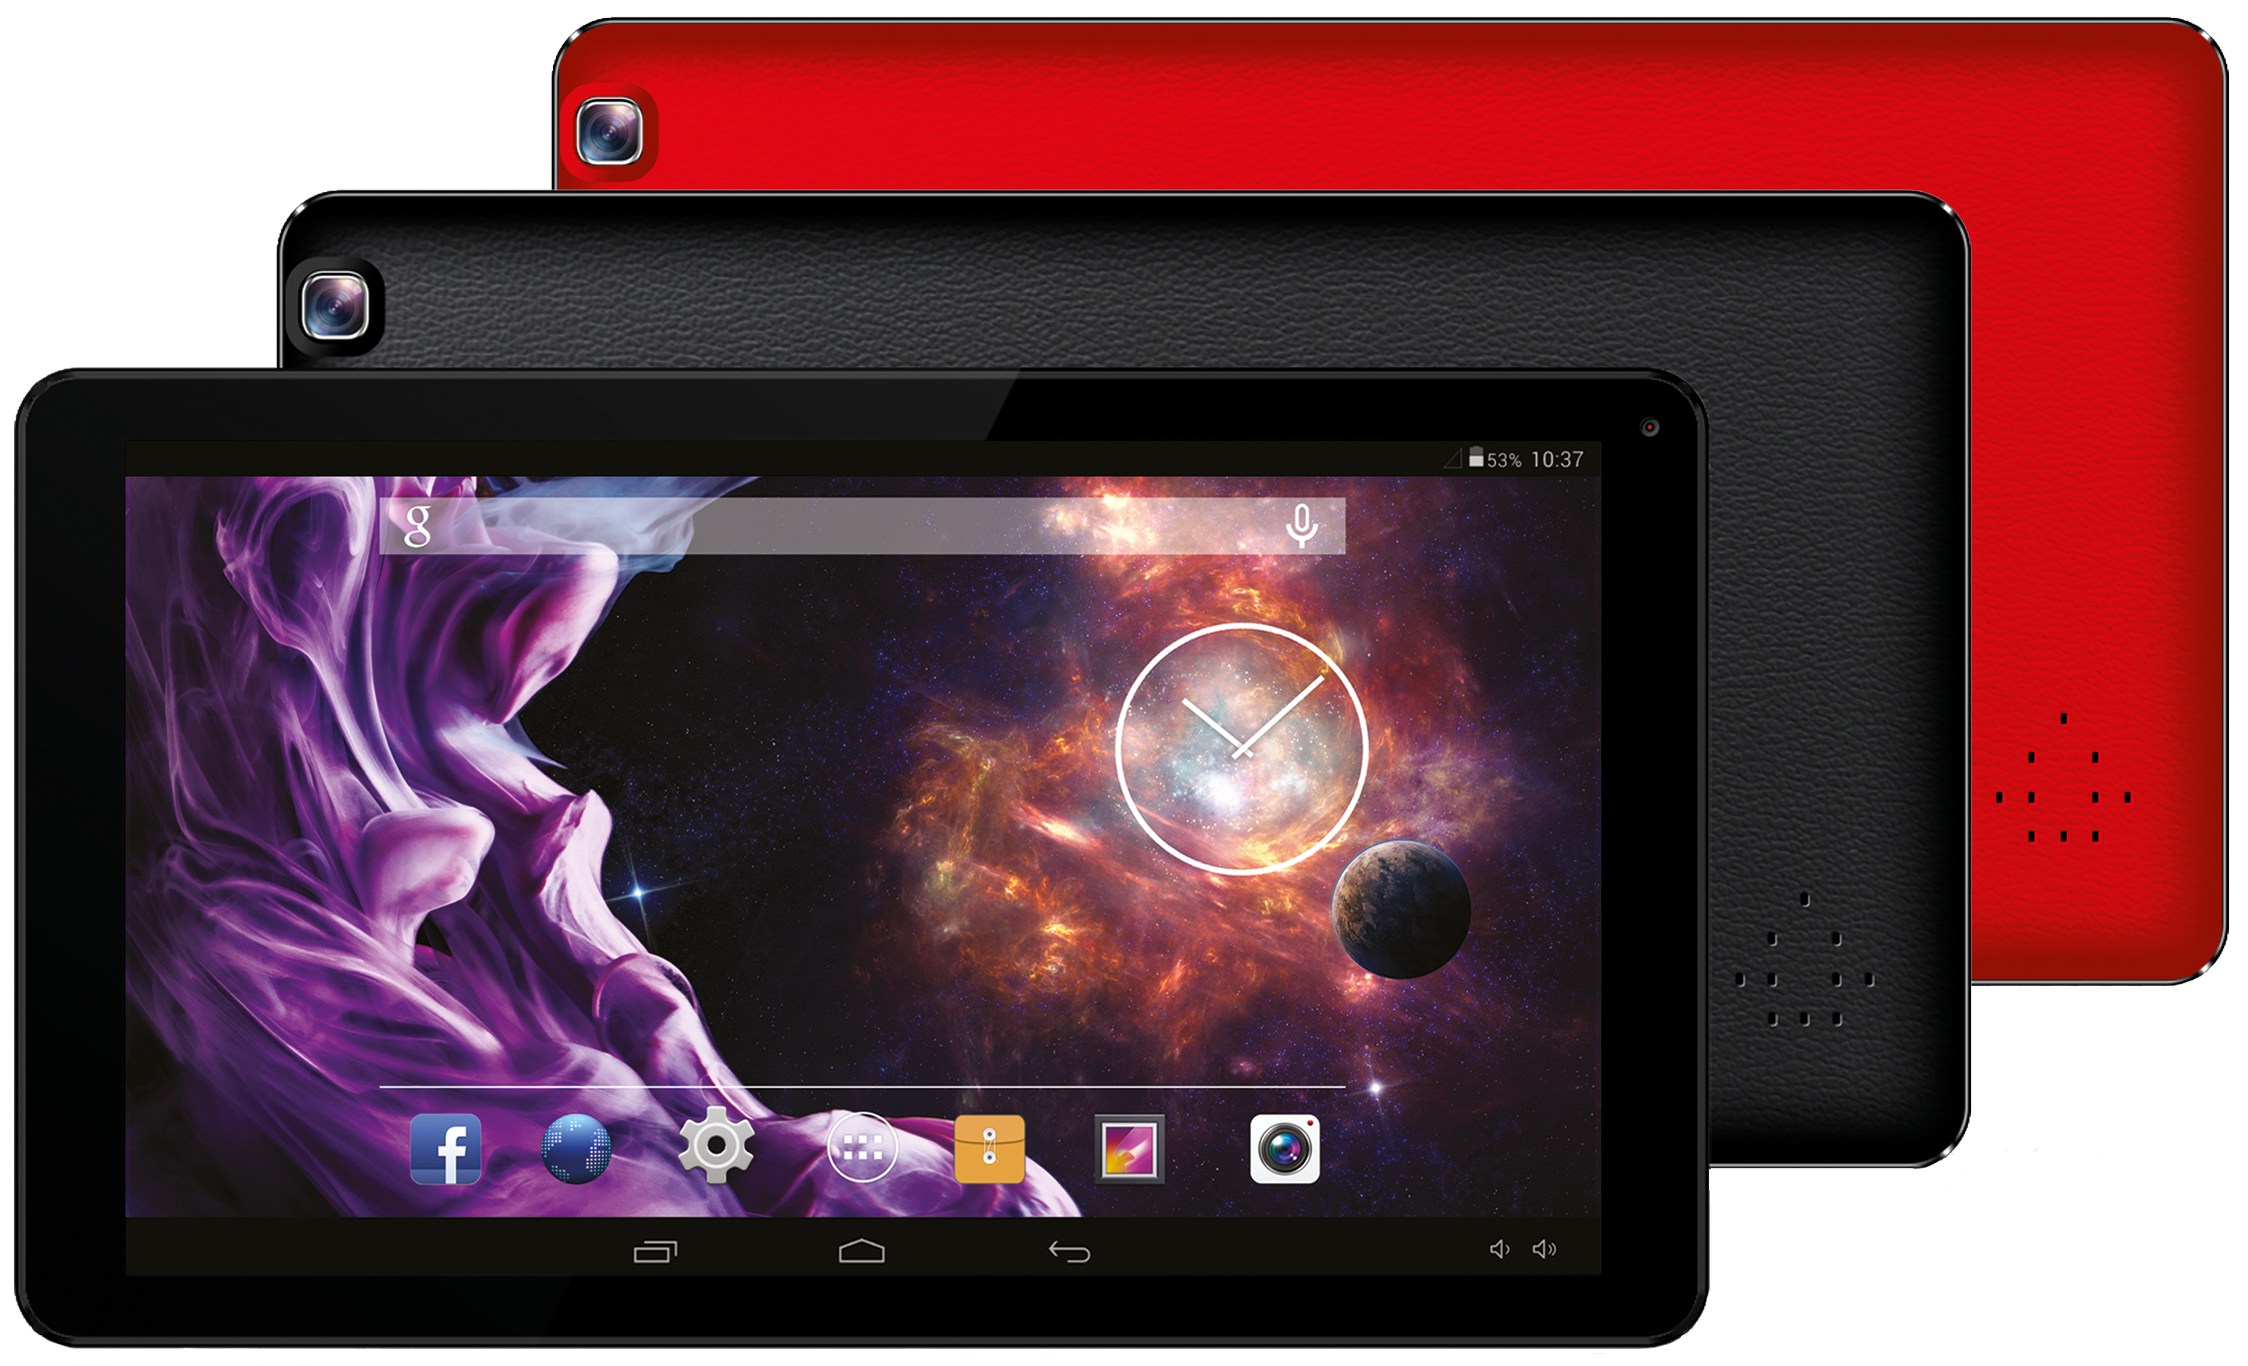 Black color New 9" inch Touchscreen Panel  for Estar zoom hd quad core mid 9054